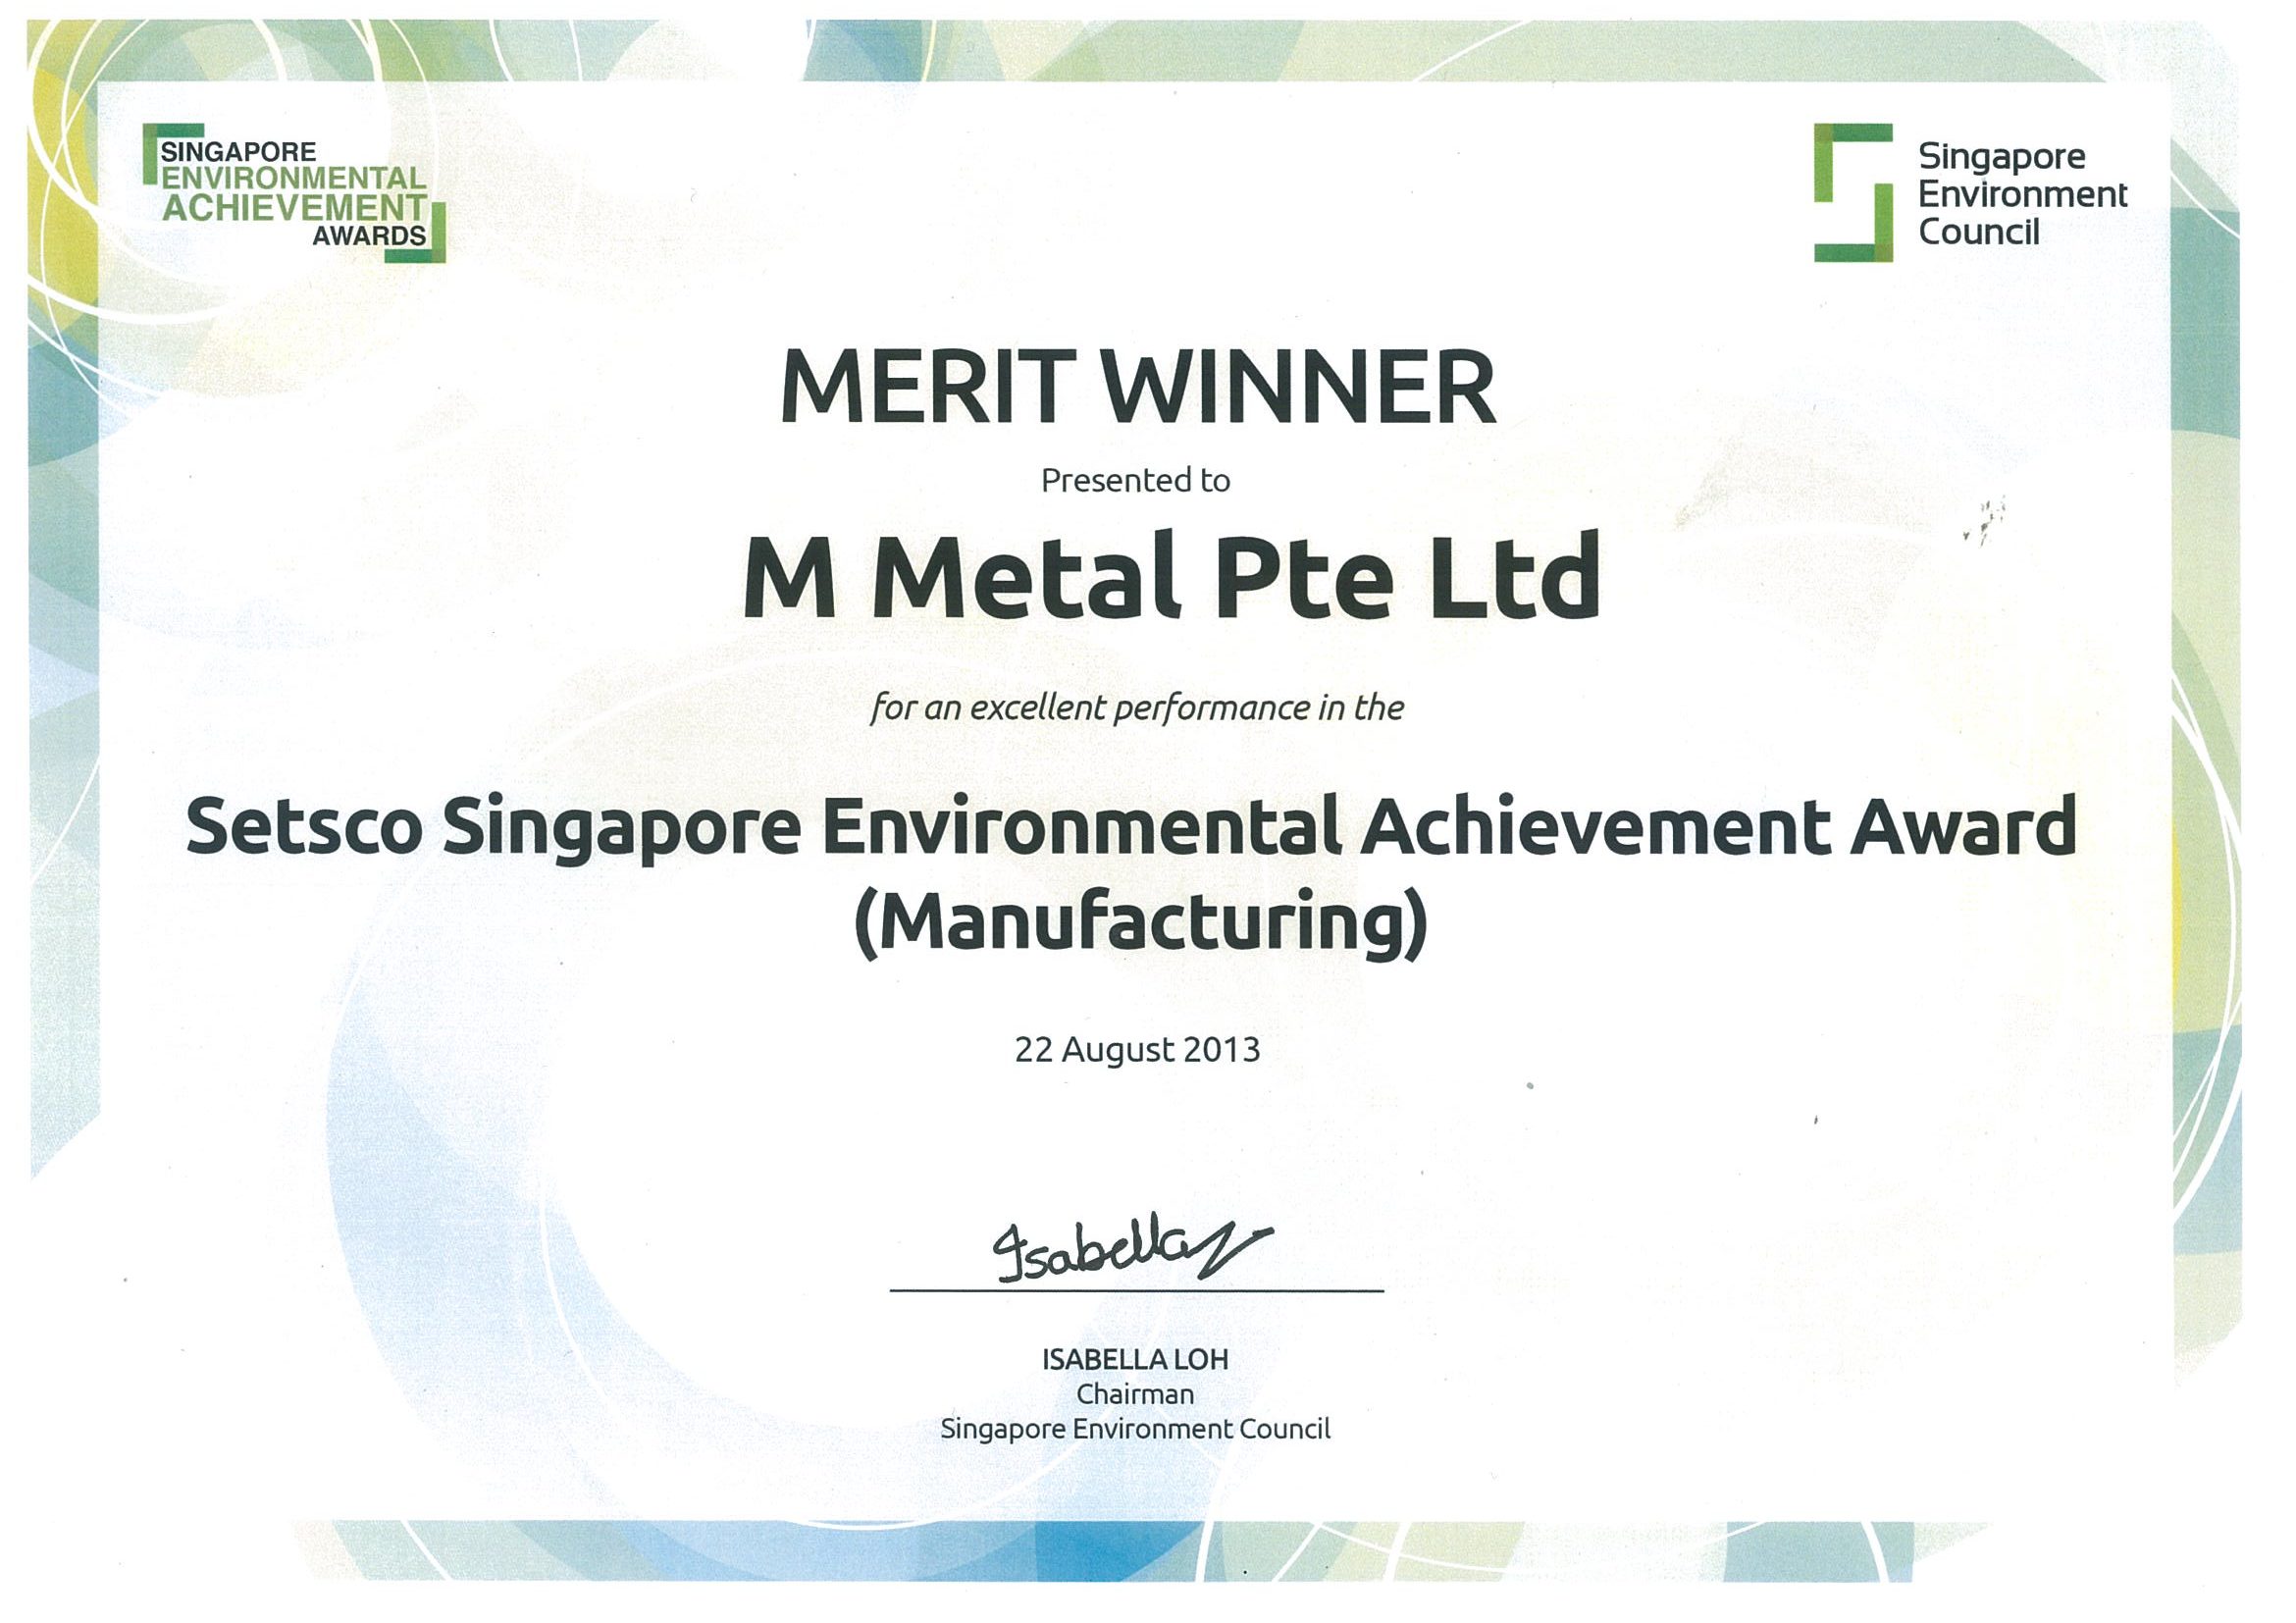 Merit Winner for Setsco Singapore Environmental Achievement Award (Manufacturing) 2013